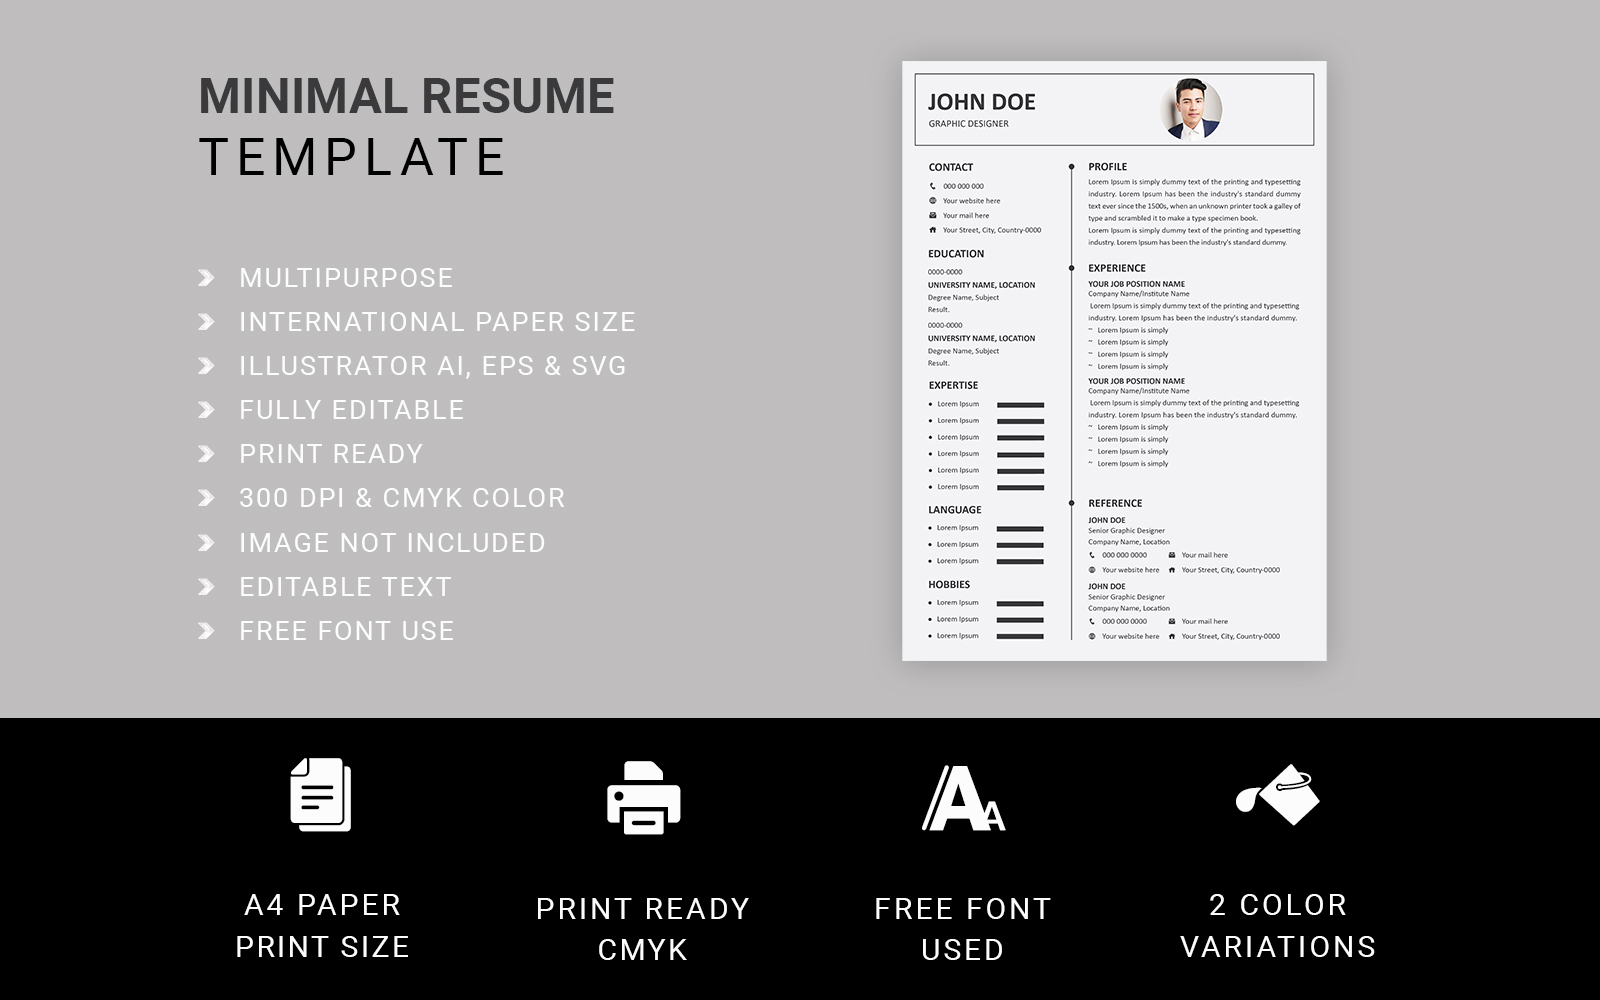 Modern Resume Template Design